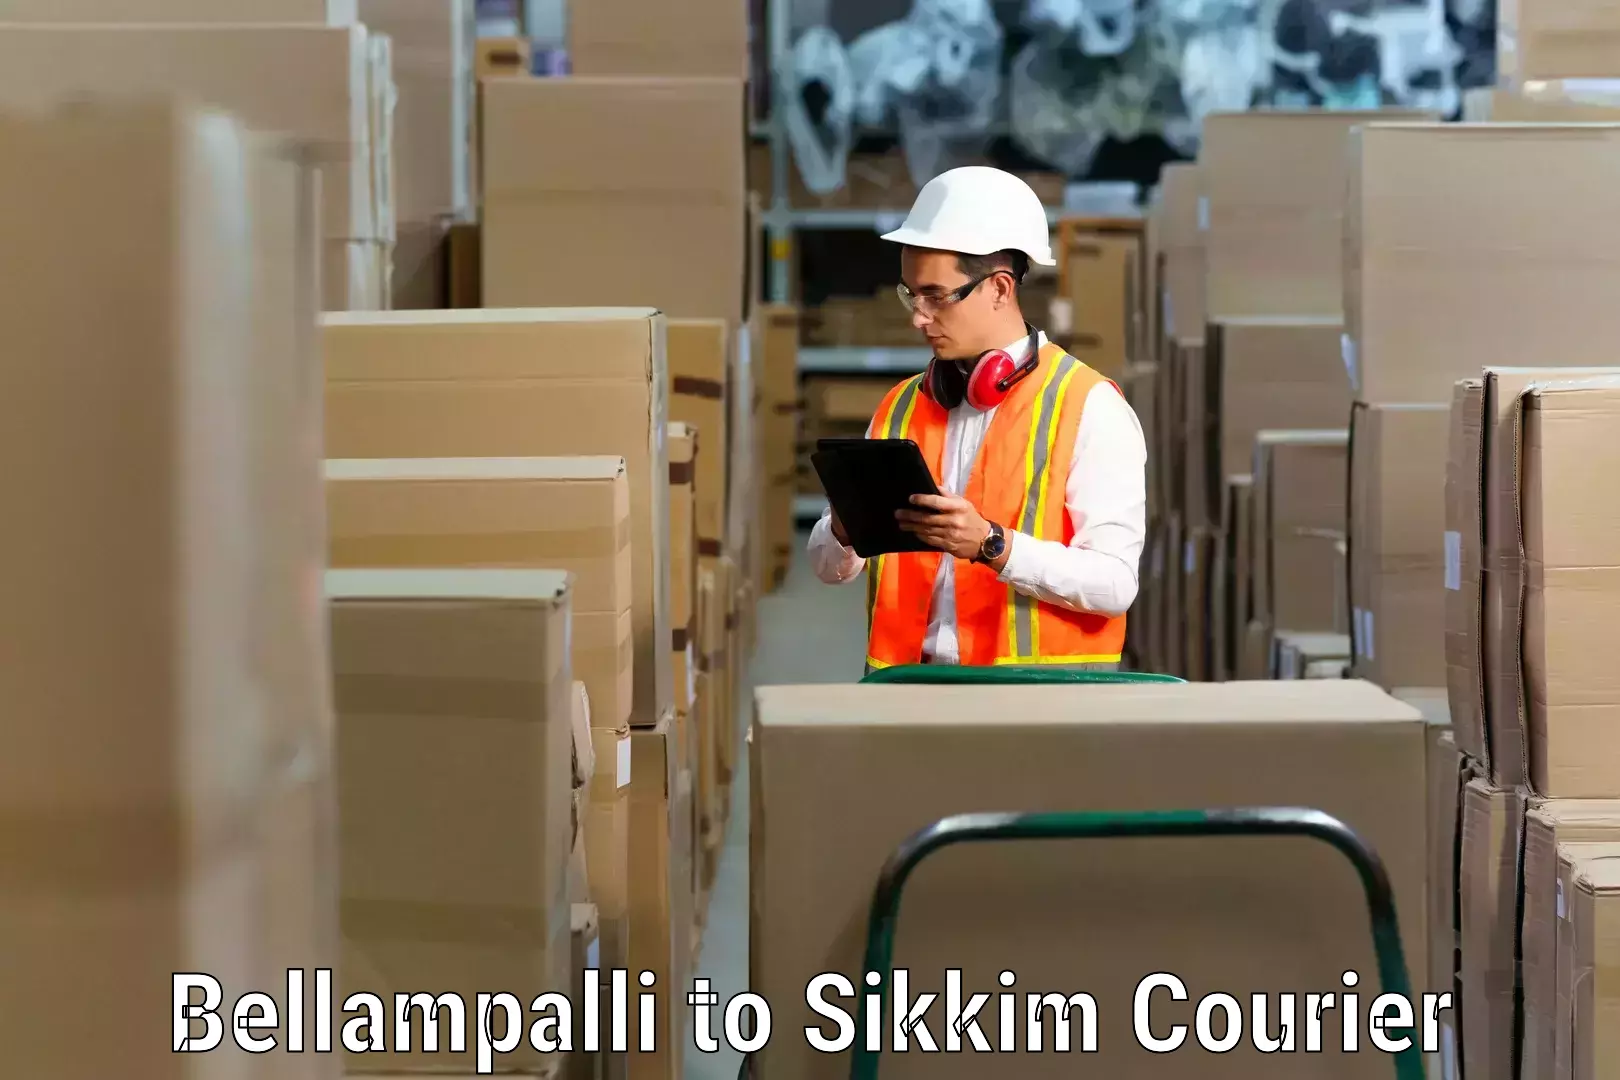 Professional moving company Bellampalli to Pelling